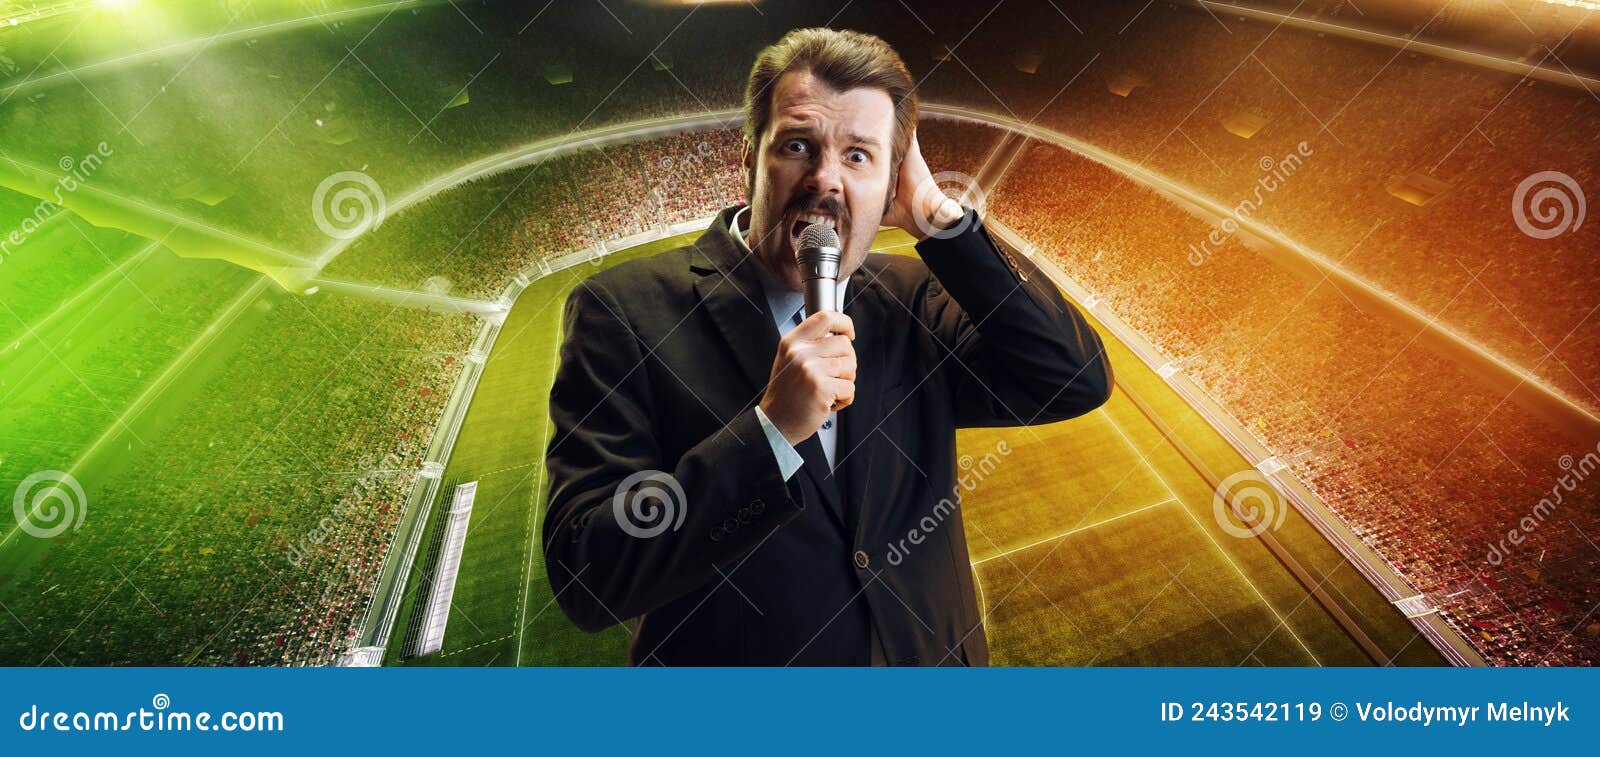 Emotive Man, Professional Sport Commentator Having Online TV Stream, Broadcasting Football Match Isolated Over Stadium Stock Image